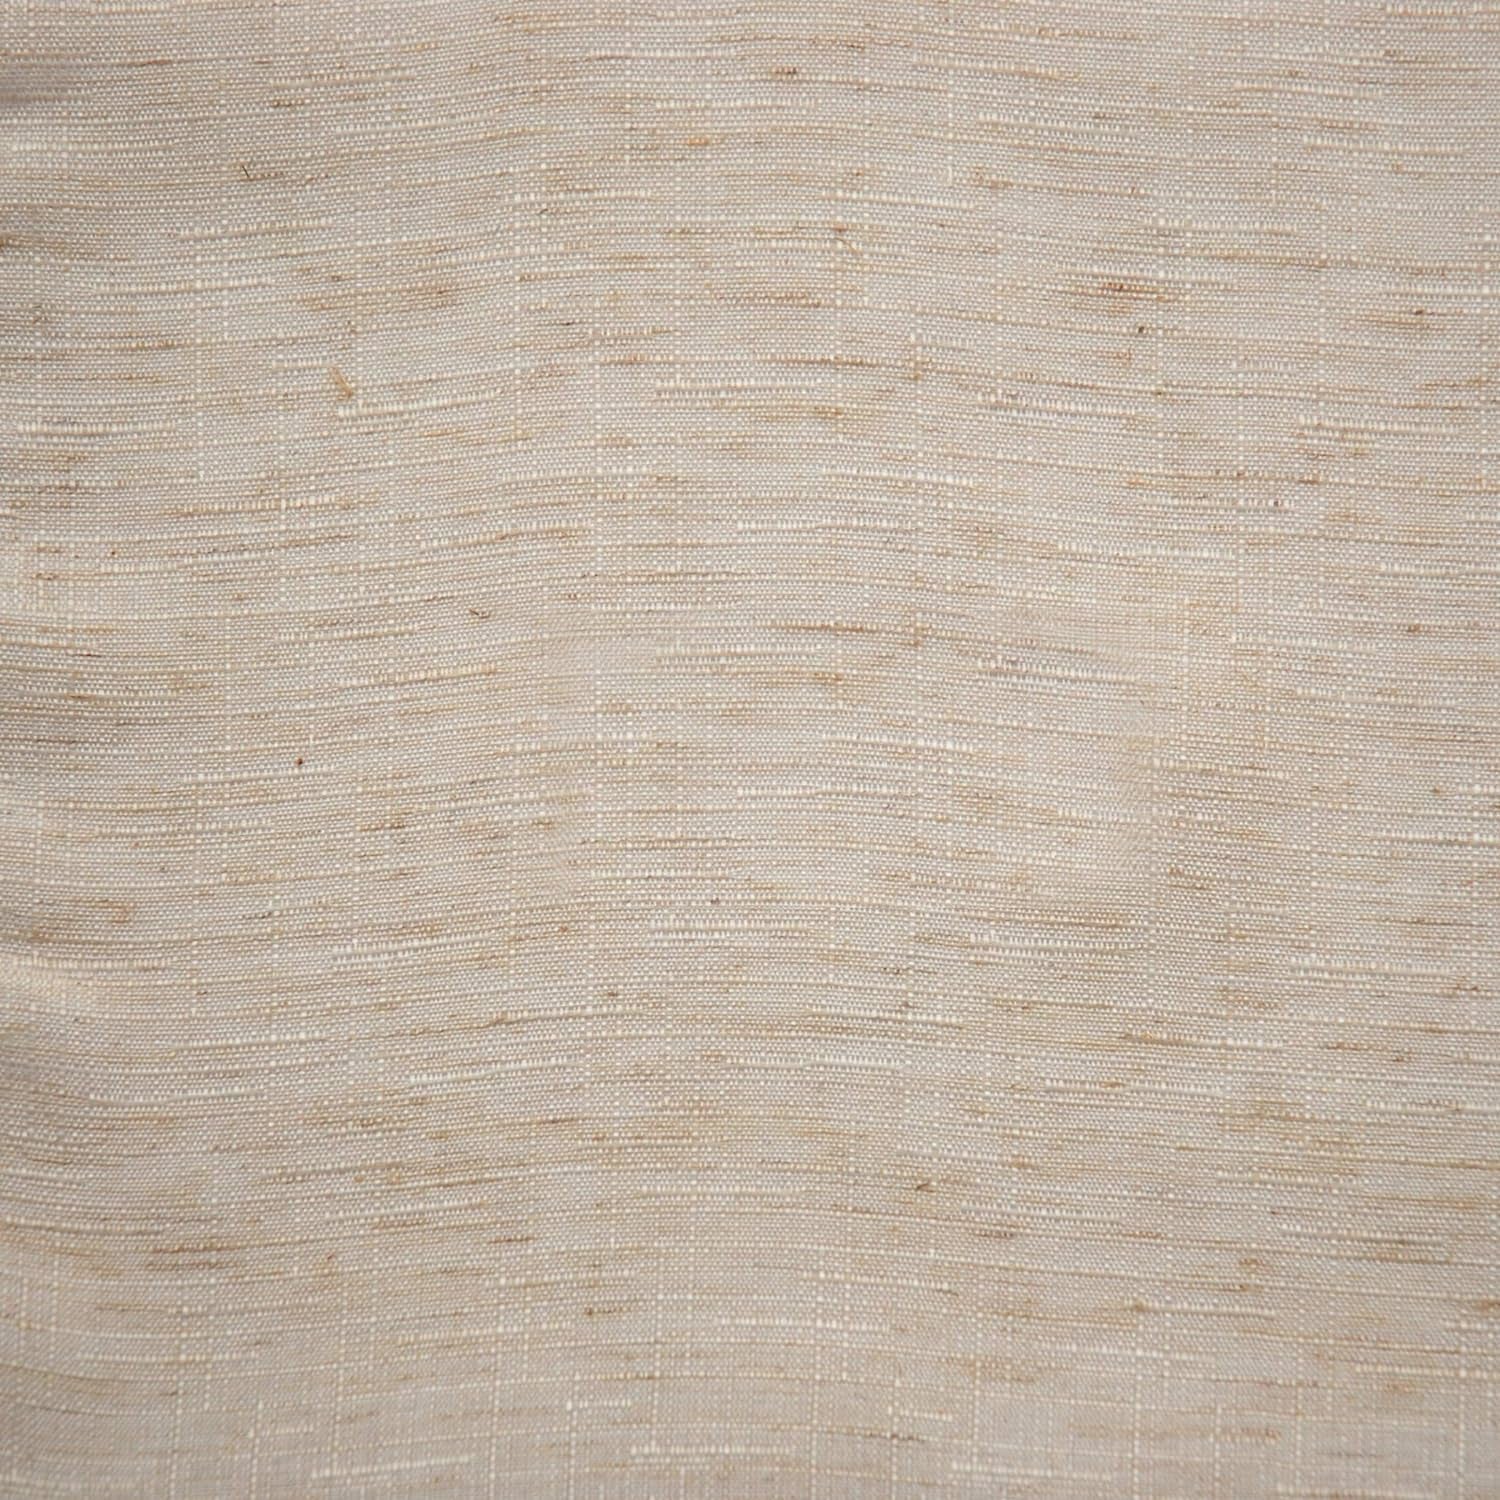 No. 918 Amalfi Linen Blend Textured Semi-Sheer Rod Pocket Curtain Panel, 54" X 84", Ivory  No. 918   